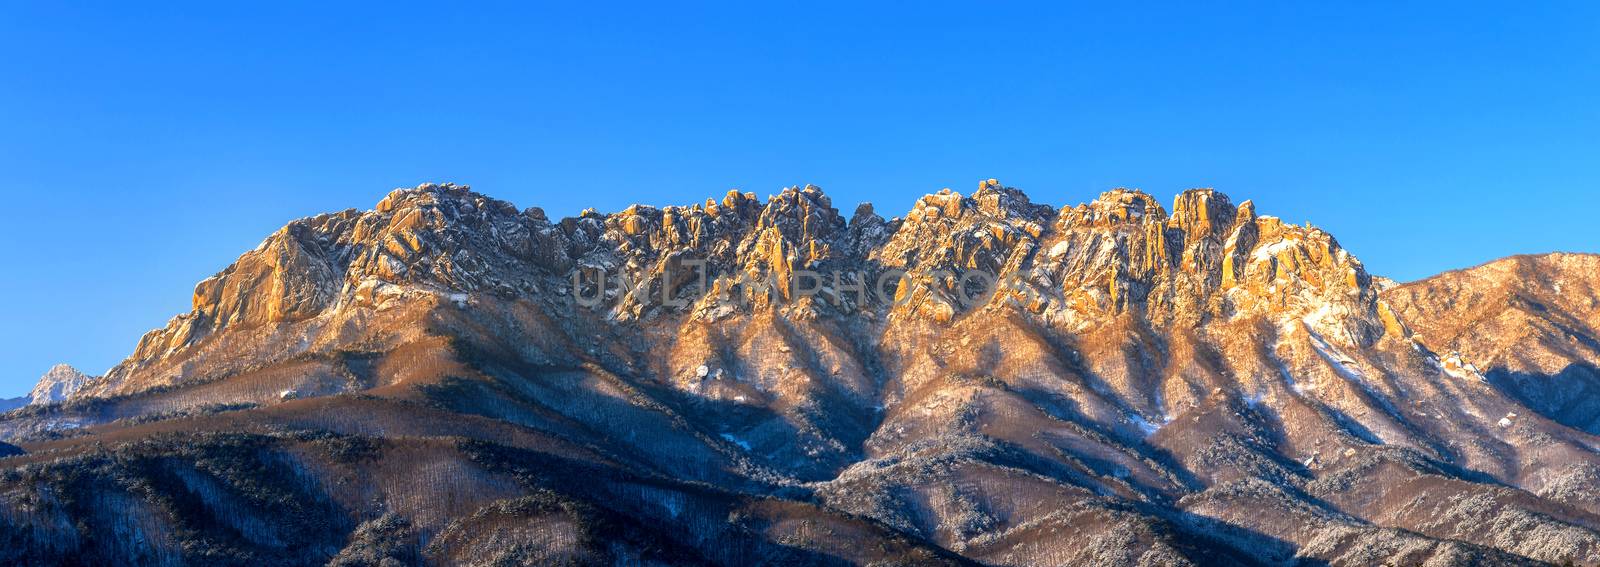 Ulsan bawi Rock in Seoraksan mountains in winter, South Korea. by gutarphotoghaphy